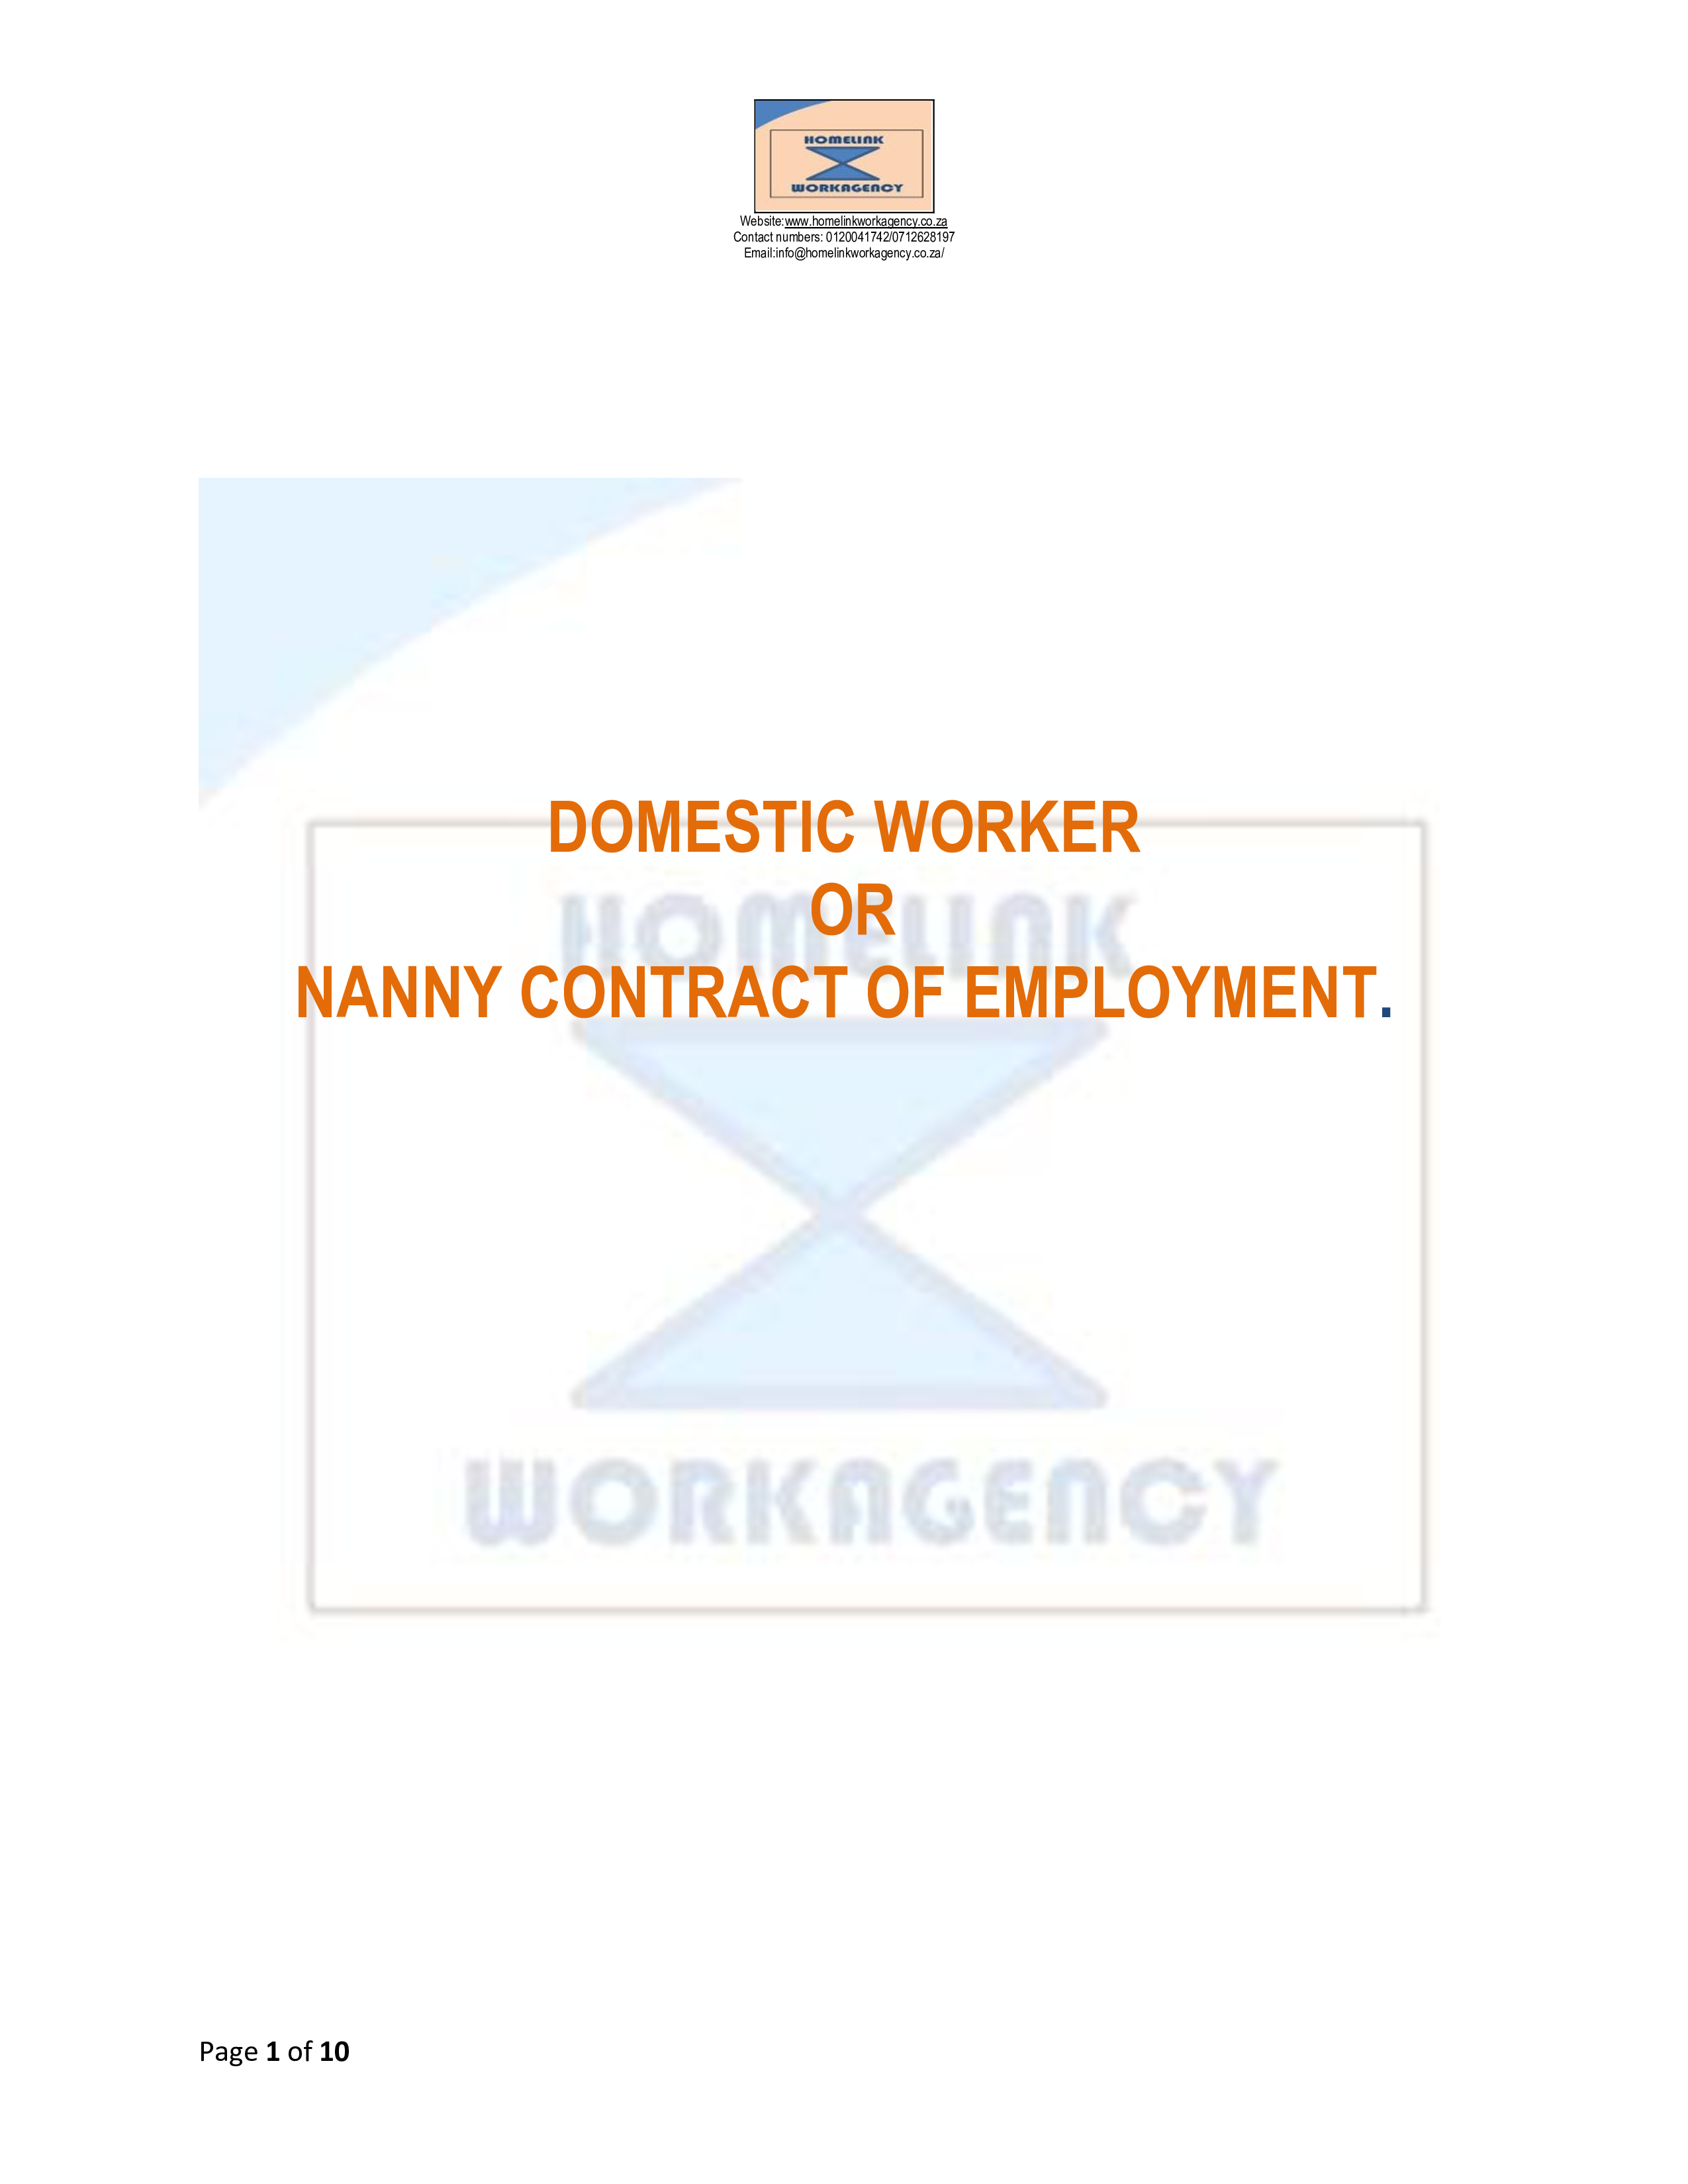 Domestic Nanny Contract main image